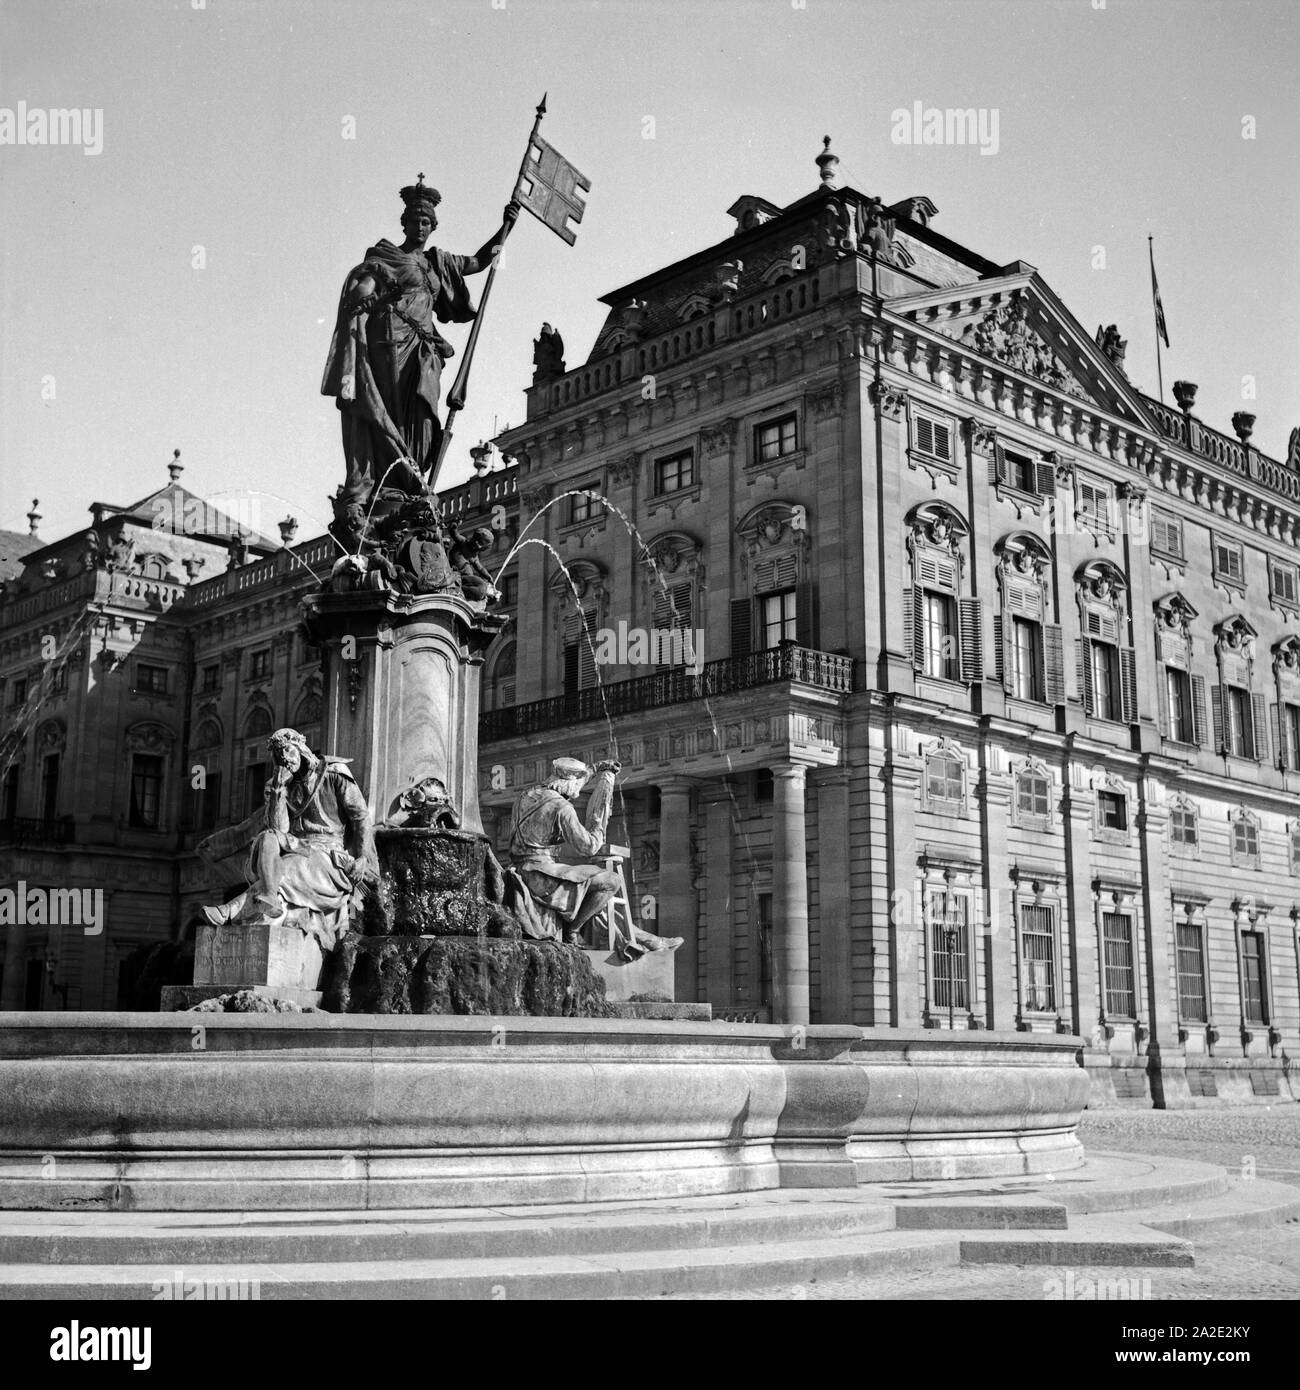 Brunnen vor der Residenz zu Würzburg, Deutschland 1930 er Jahre. Fontaine en face de la Résidence de Würzburg, Allemagne 1930. Banque D'Images